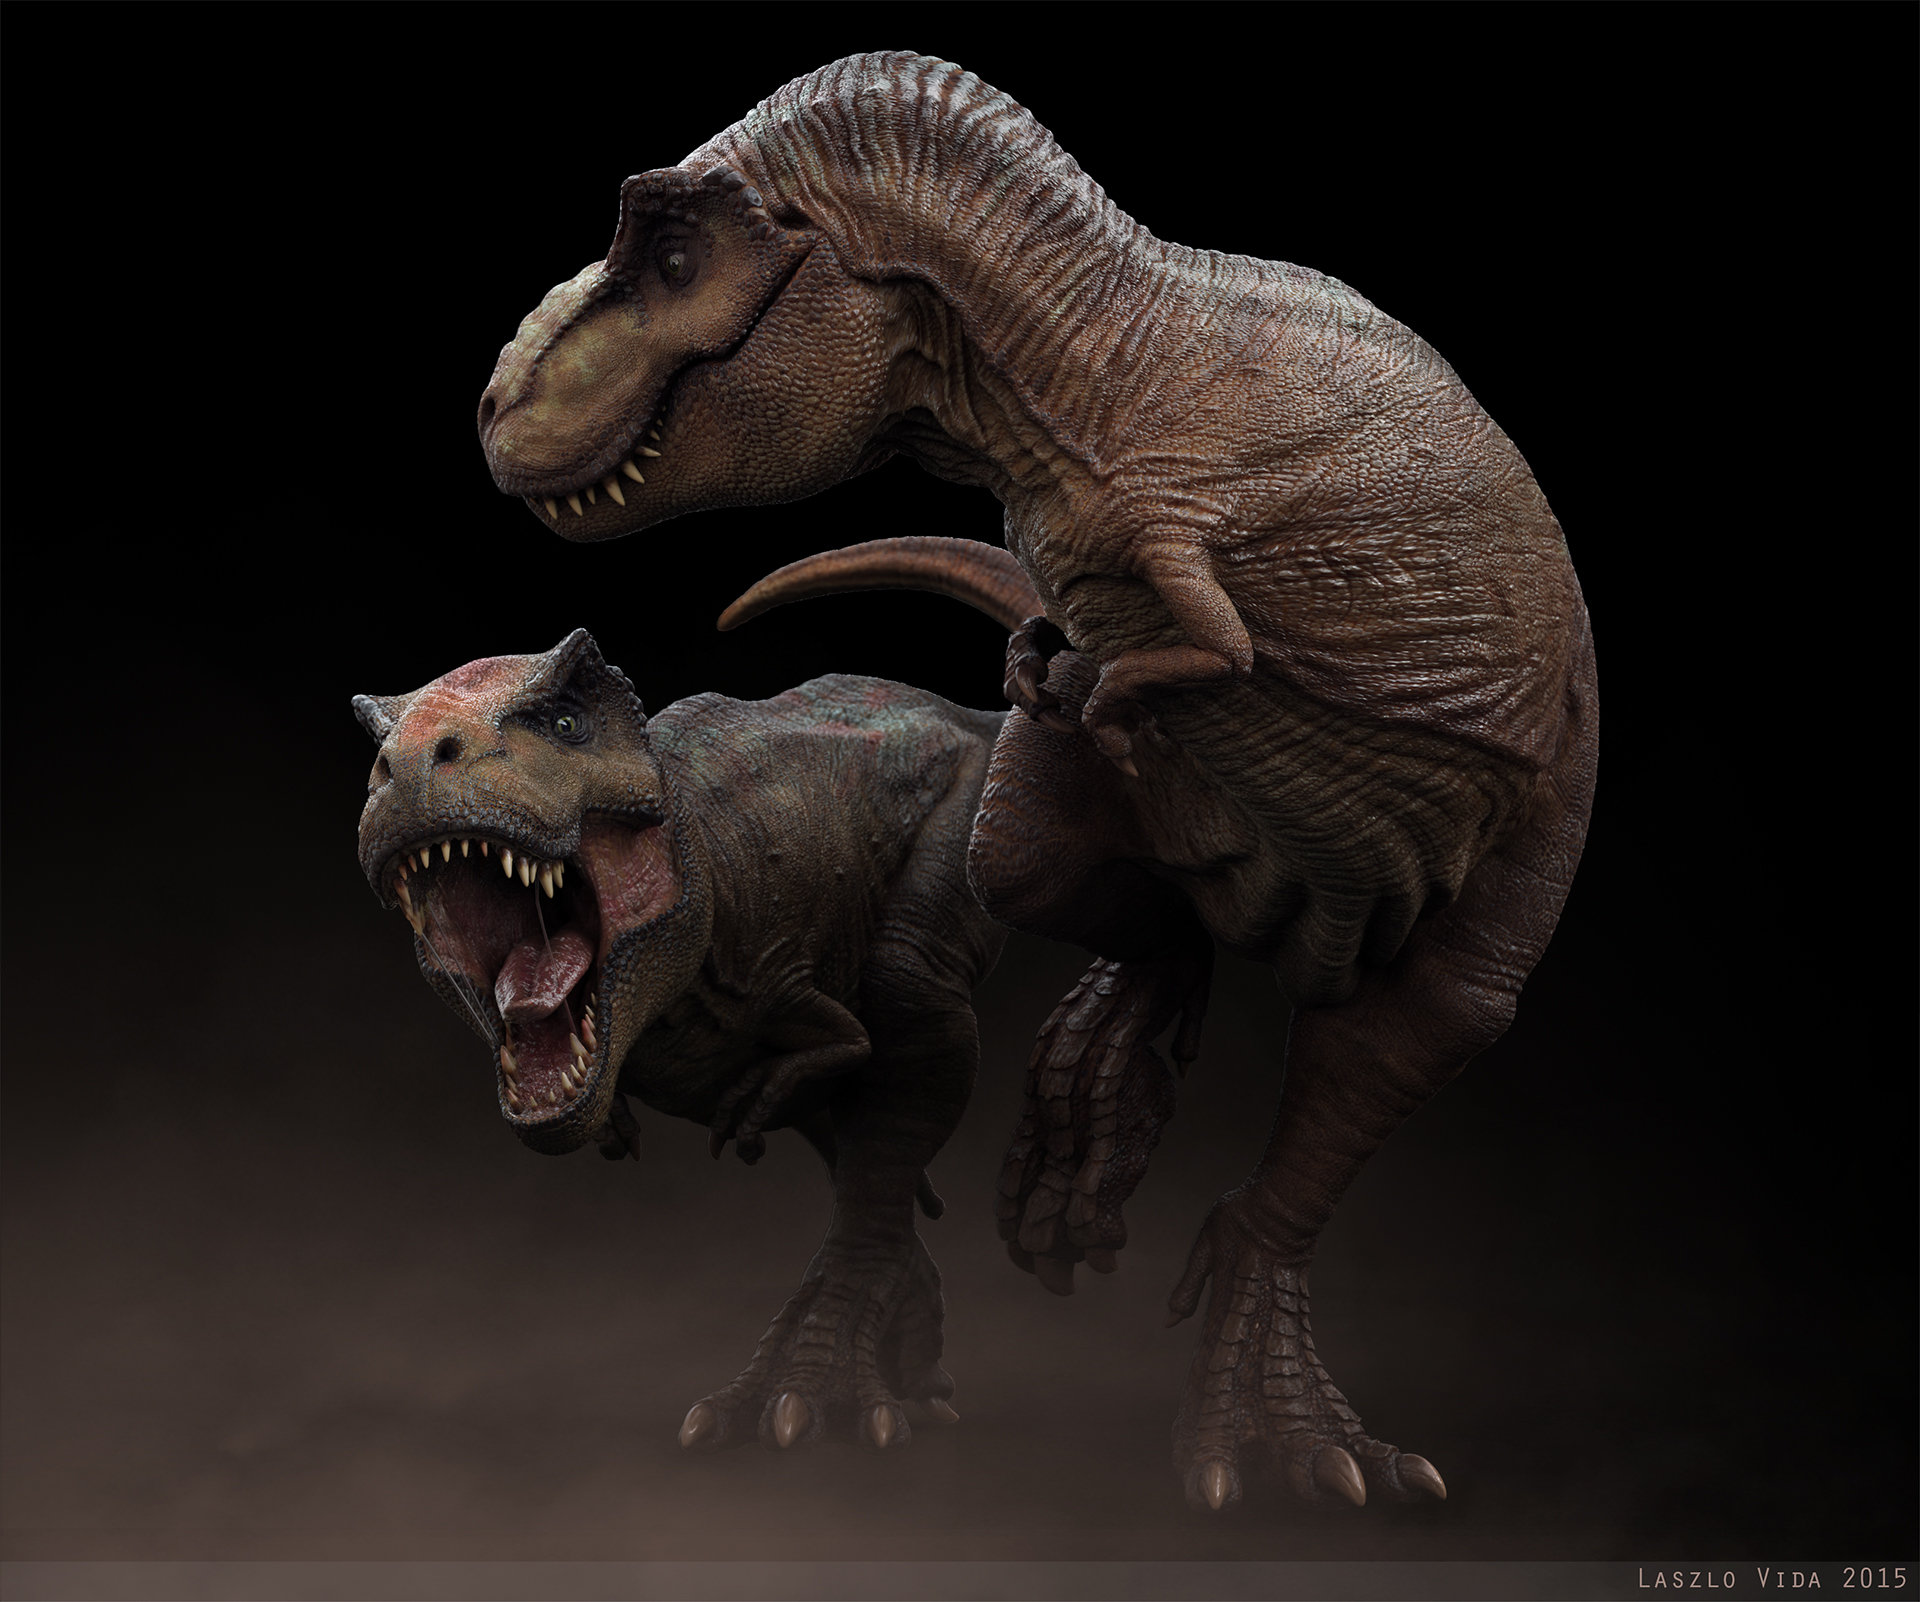 Jurassic World Hammond Collection T-Rex Action Figure HFG66 - Best Buy